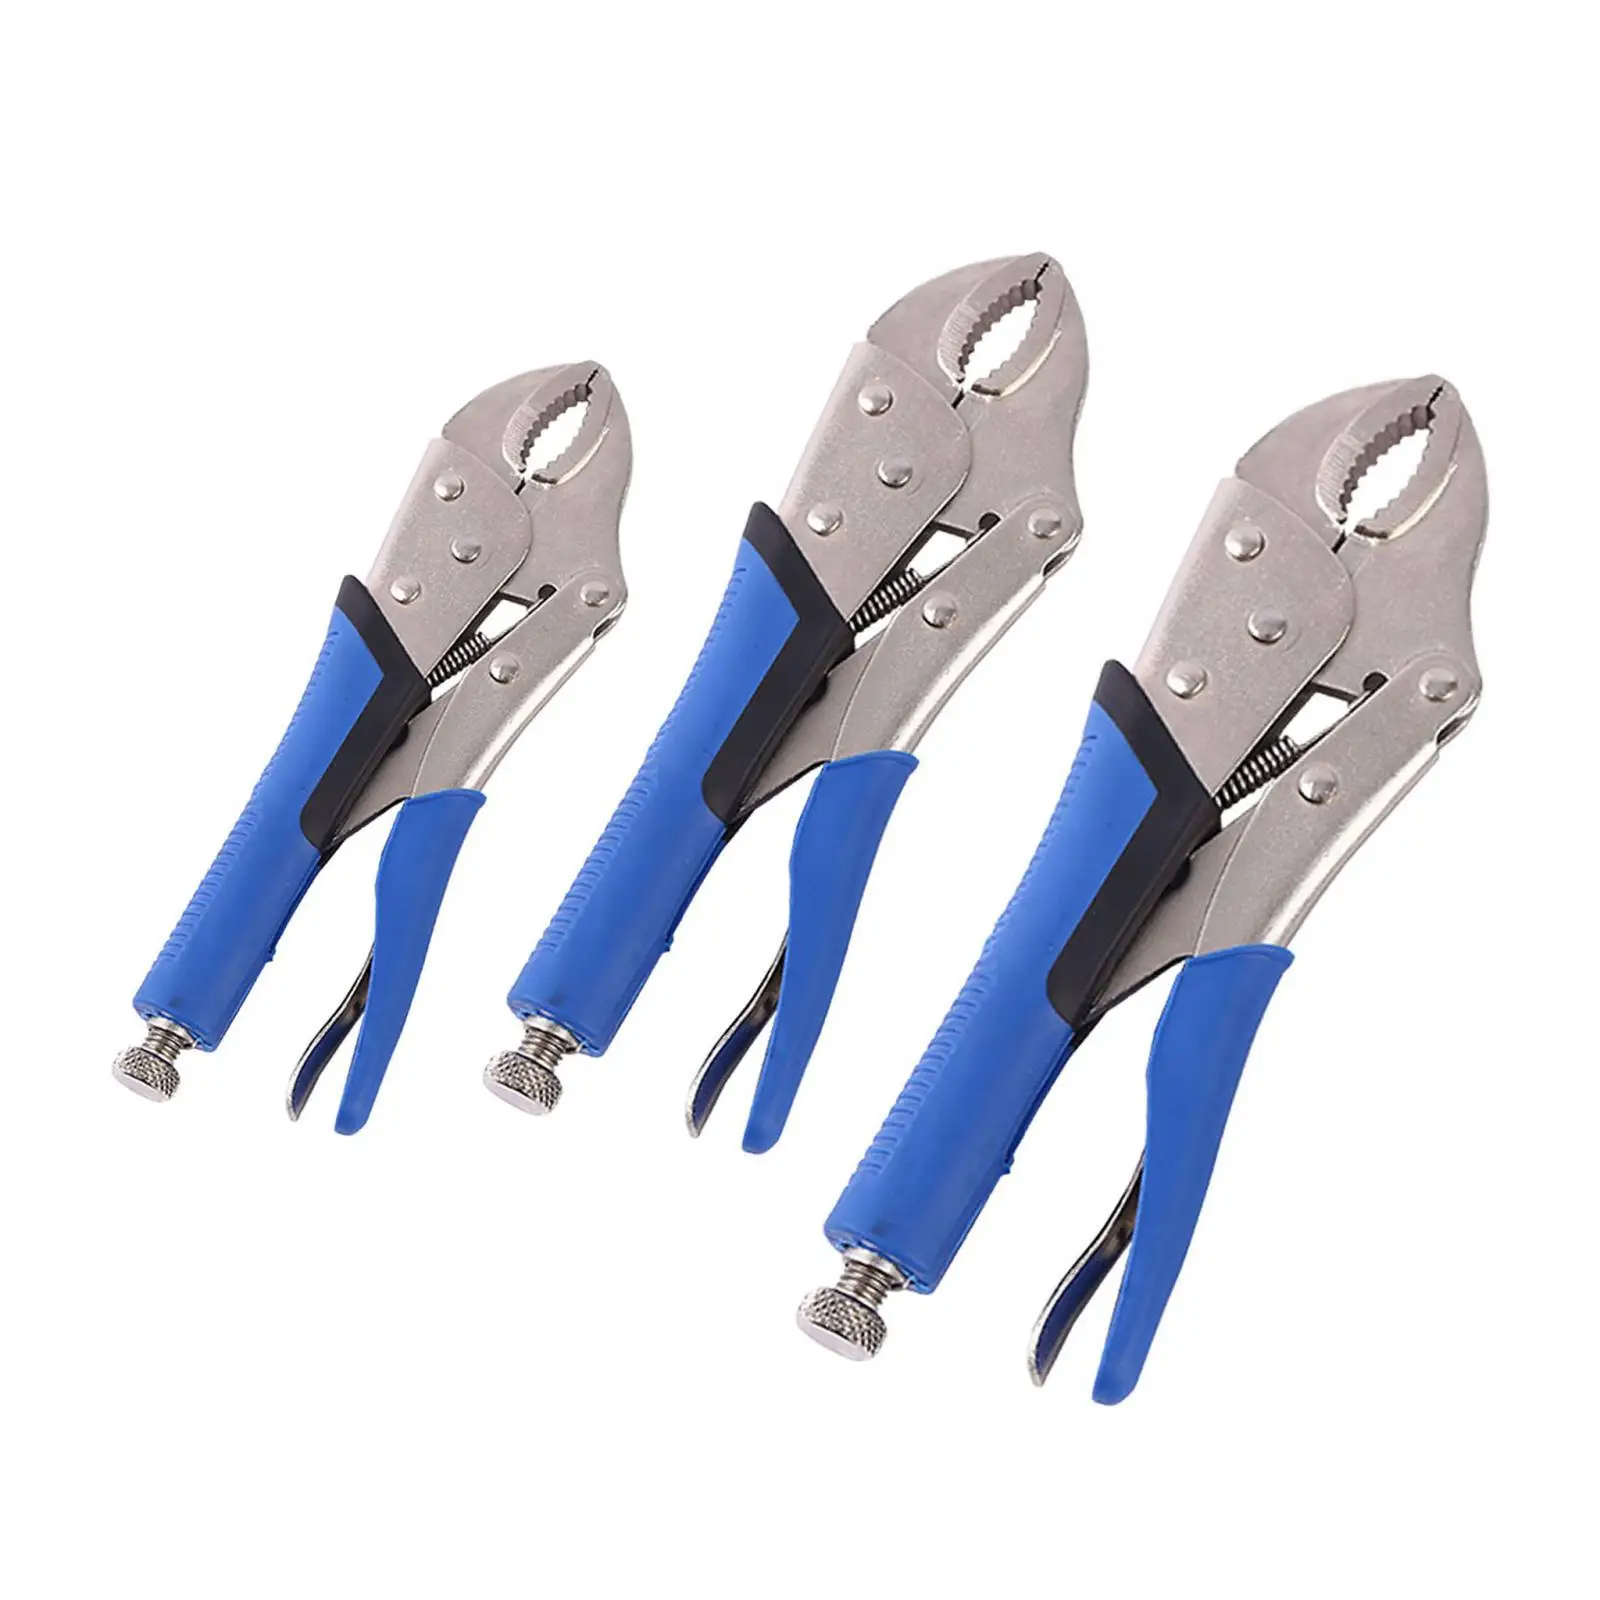 Locking Pliers Industrial Grade Steel Adjustable Welding Tool Ergonomic Handle Grip Pliers for Automotive Automobile Repair